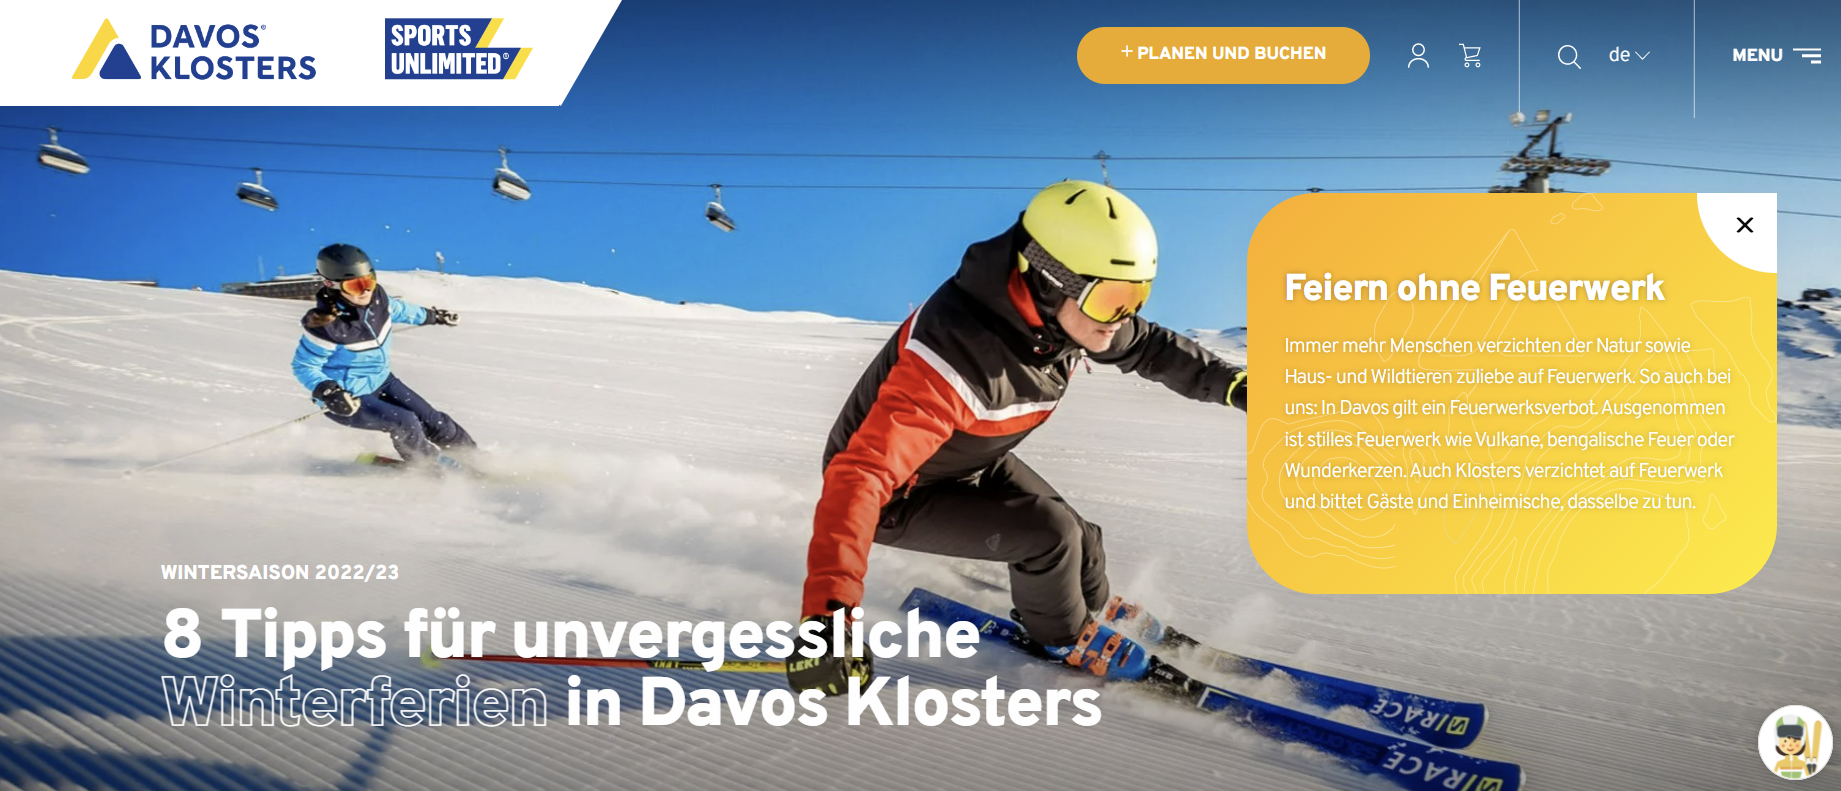 Davos Ski Resort is one of the most popular ski resorts in Europe.